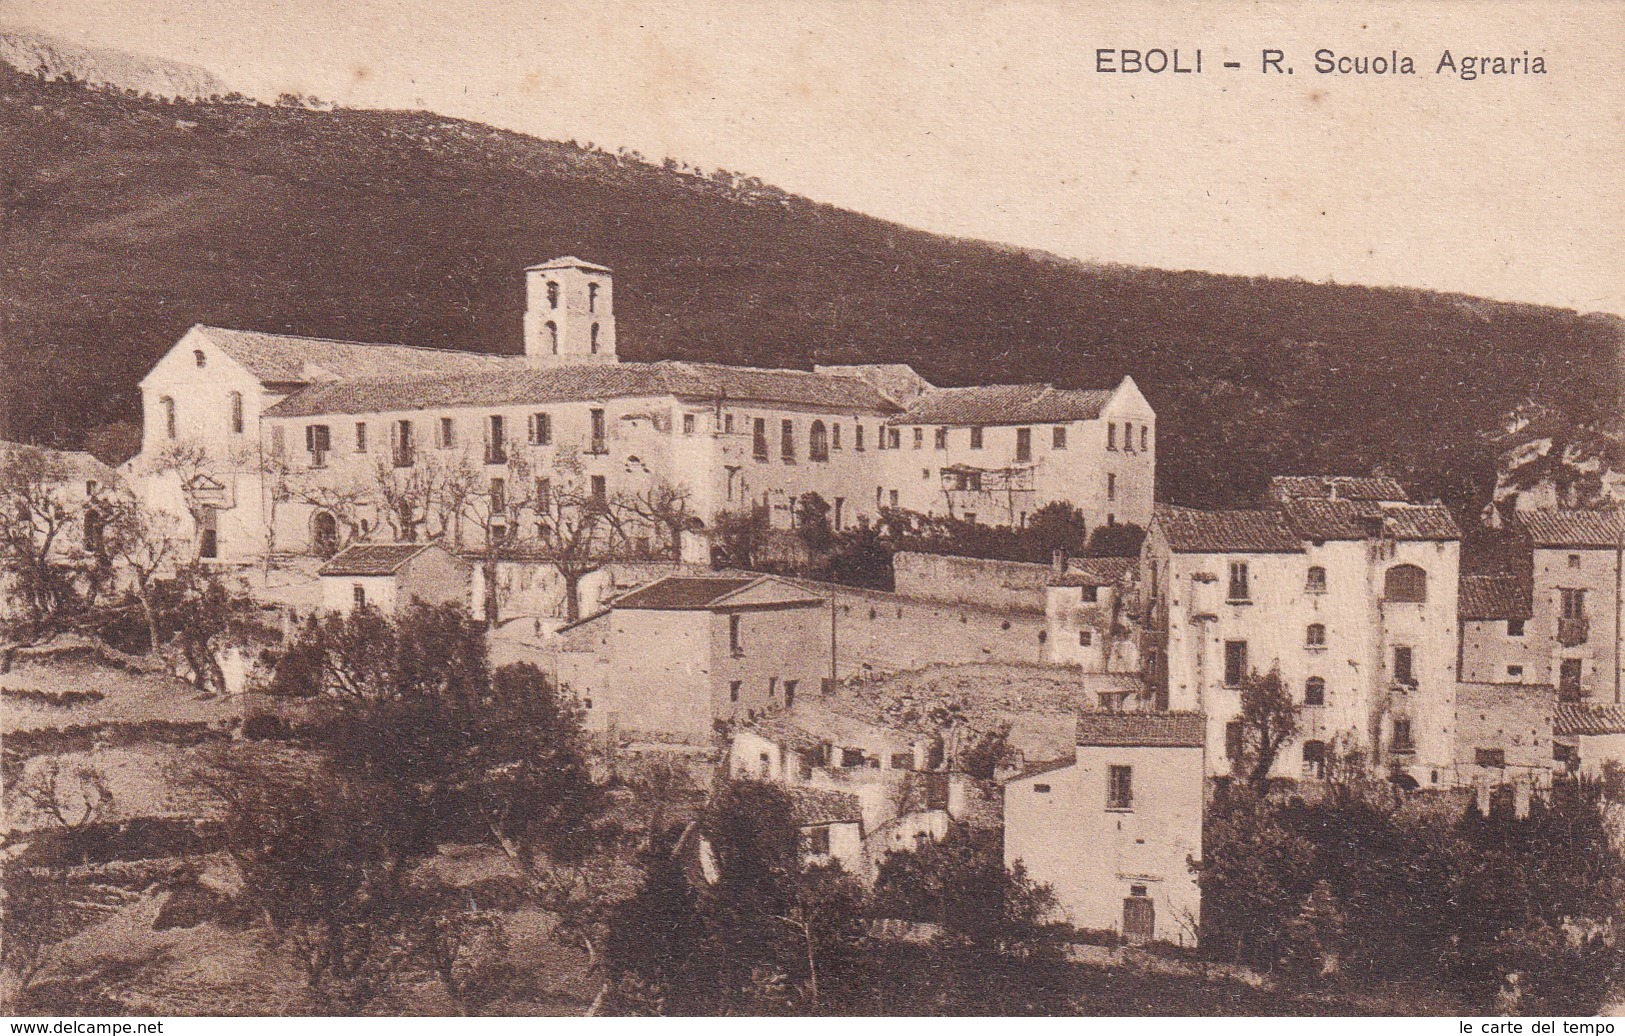 Cartolina Eboli (Salerno) - R. Scuola Agraria. - Salerno